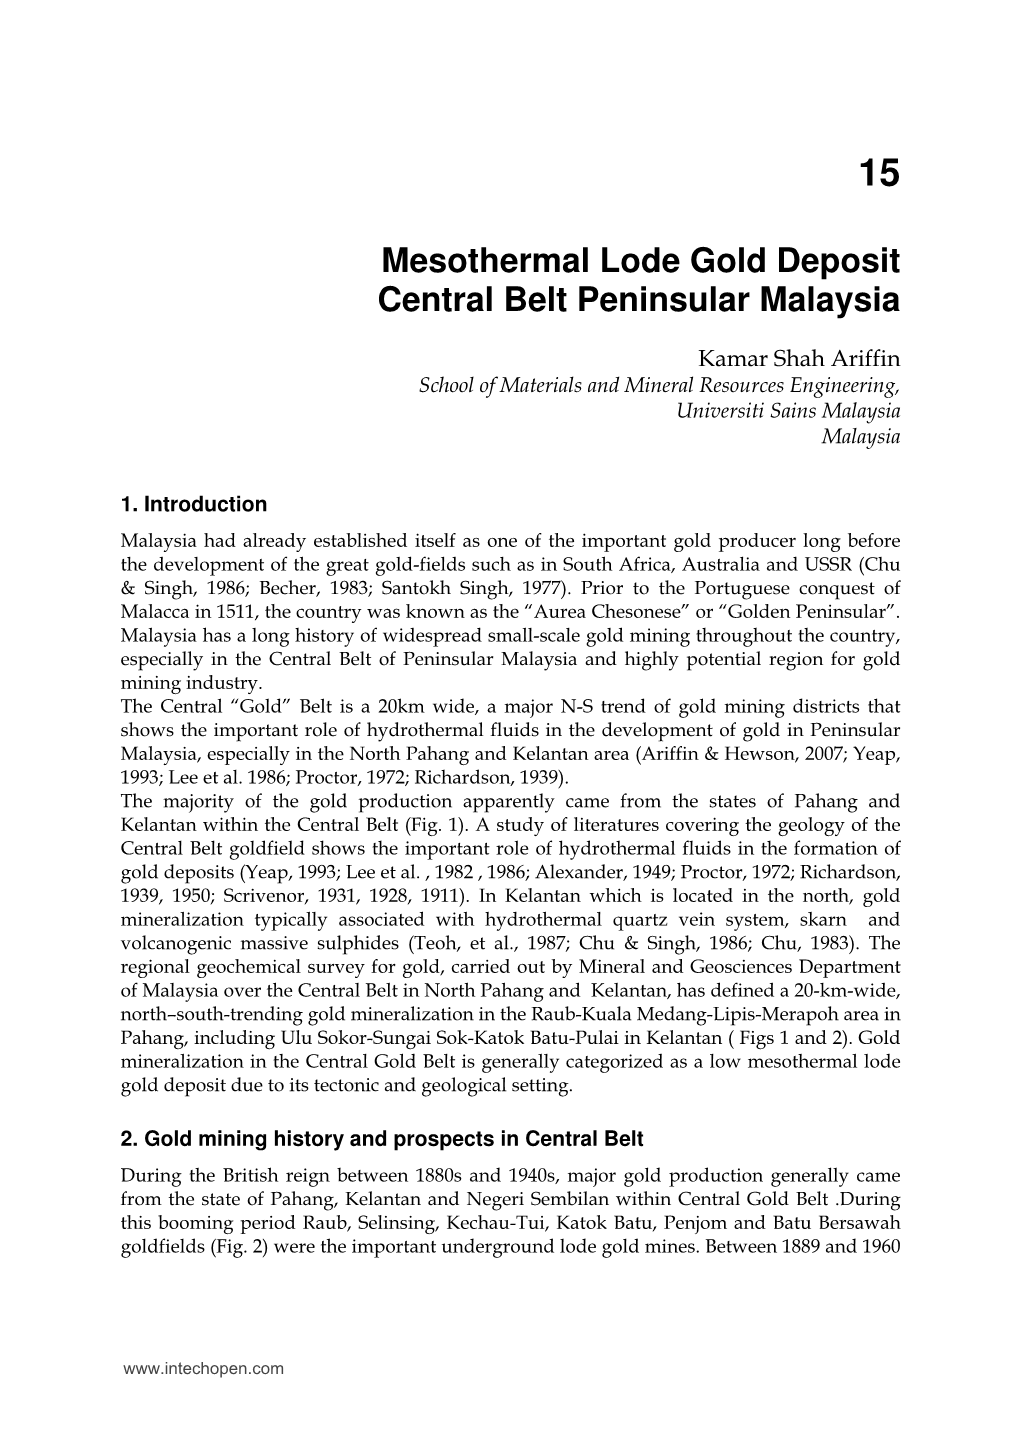 Mesothermal Lode Gold Deposit Central Belt Peninsular Malaysia